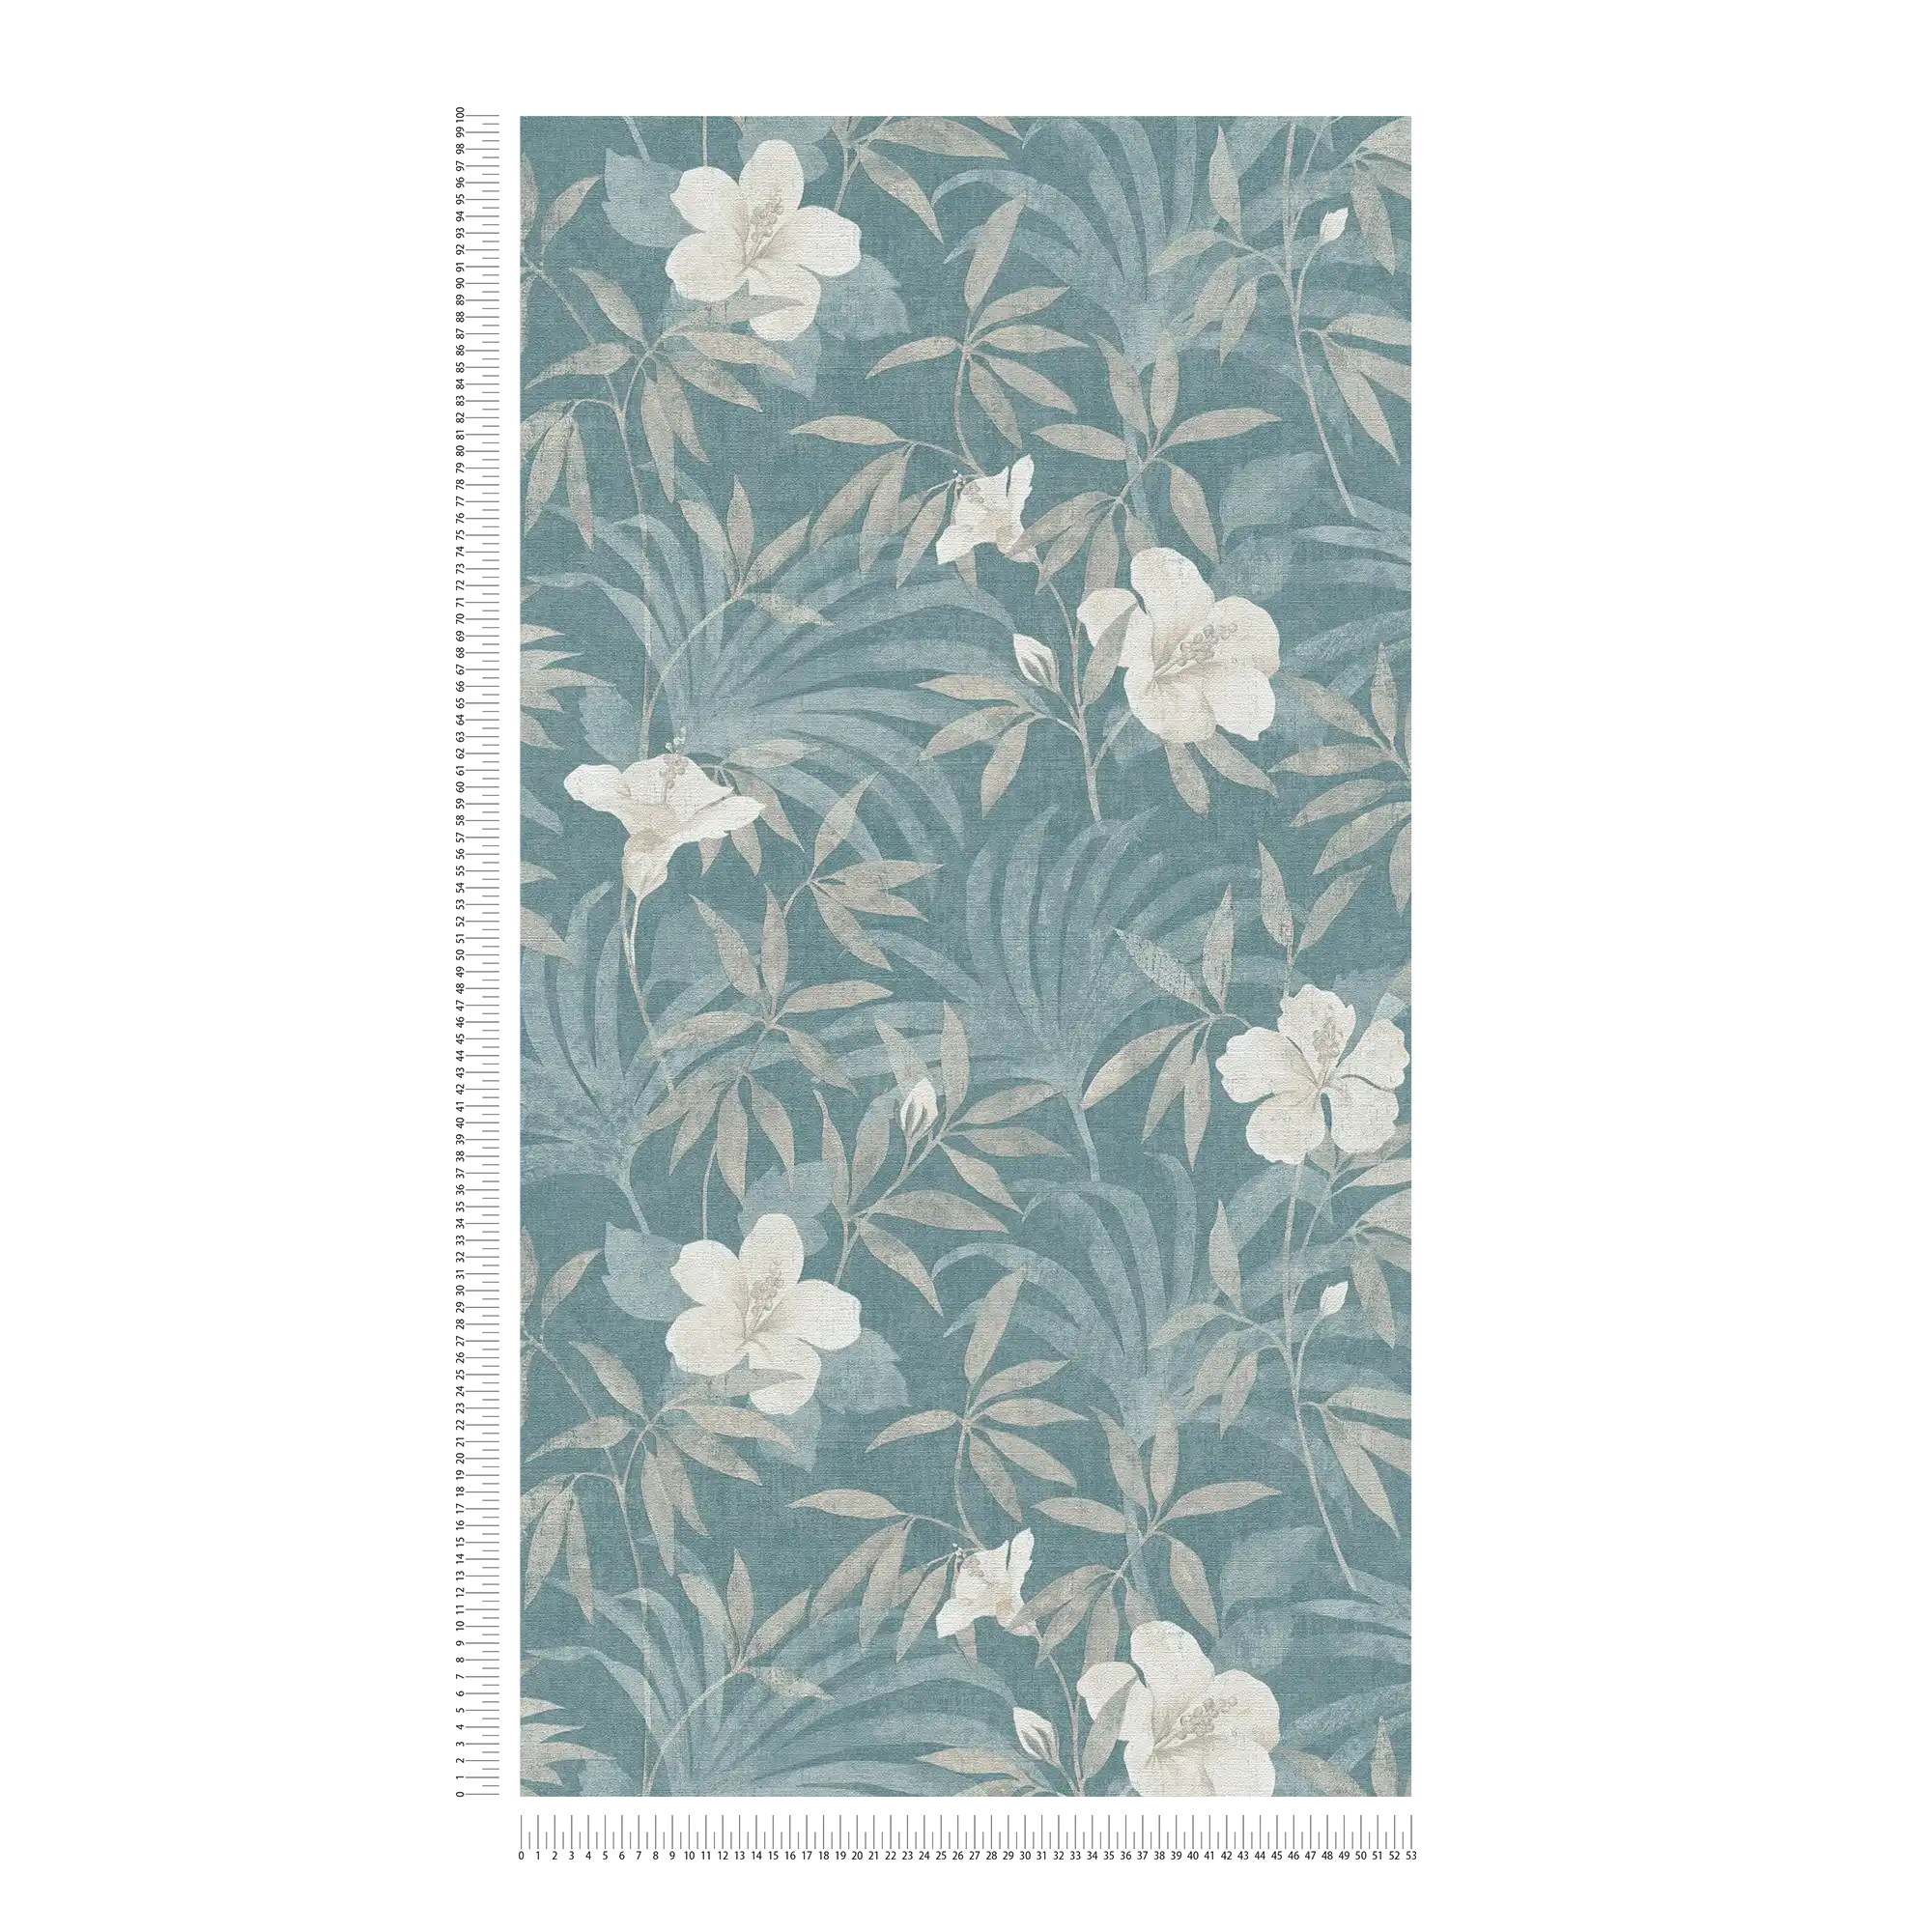             Tapete Petrol Dschungel Muster mit Hibiskus Blüten – Beige, Blau
        